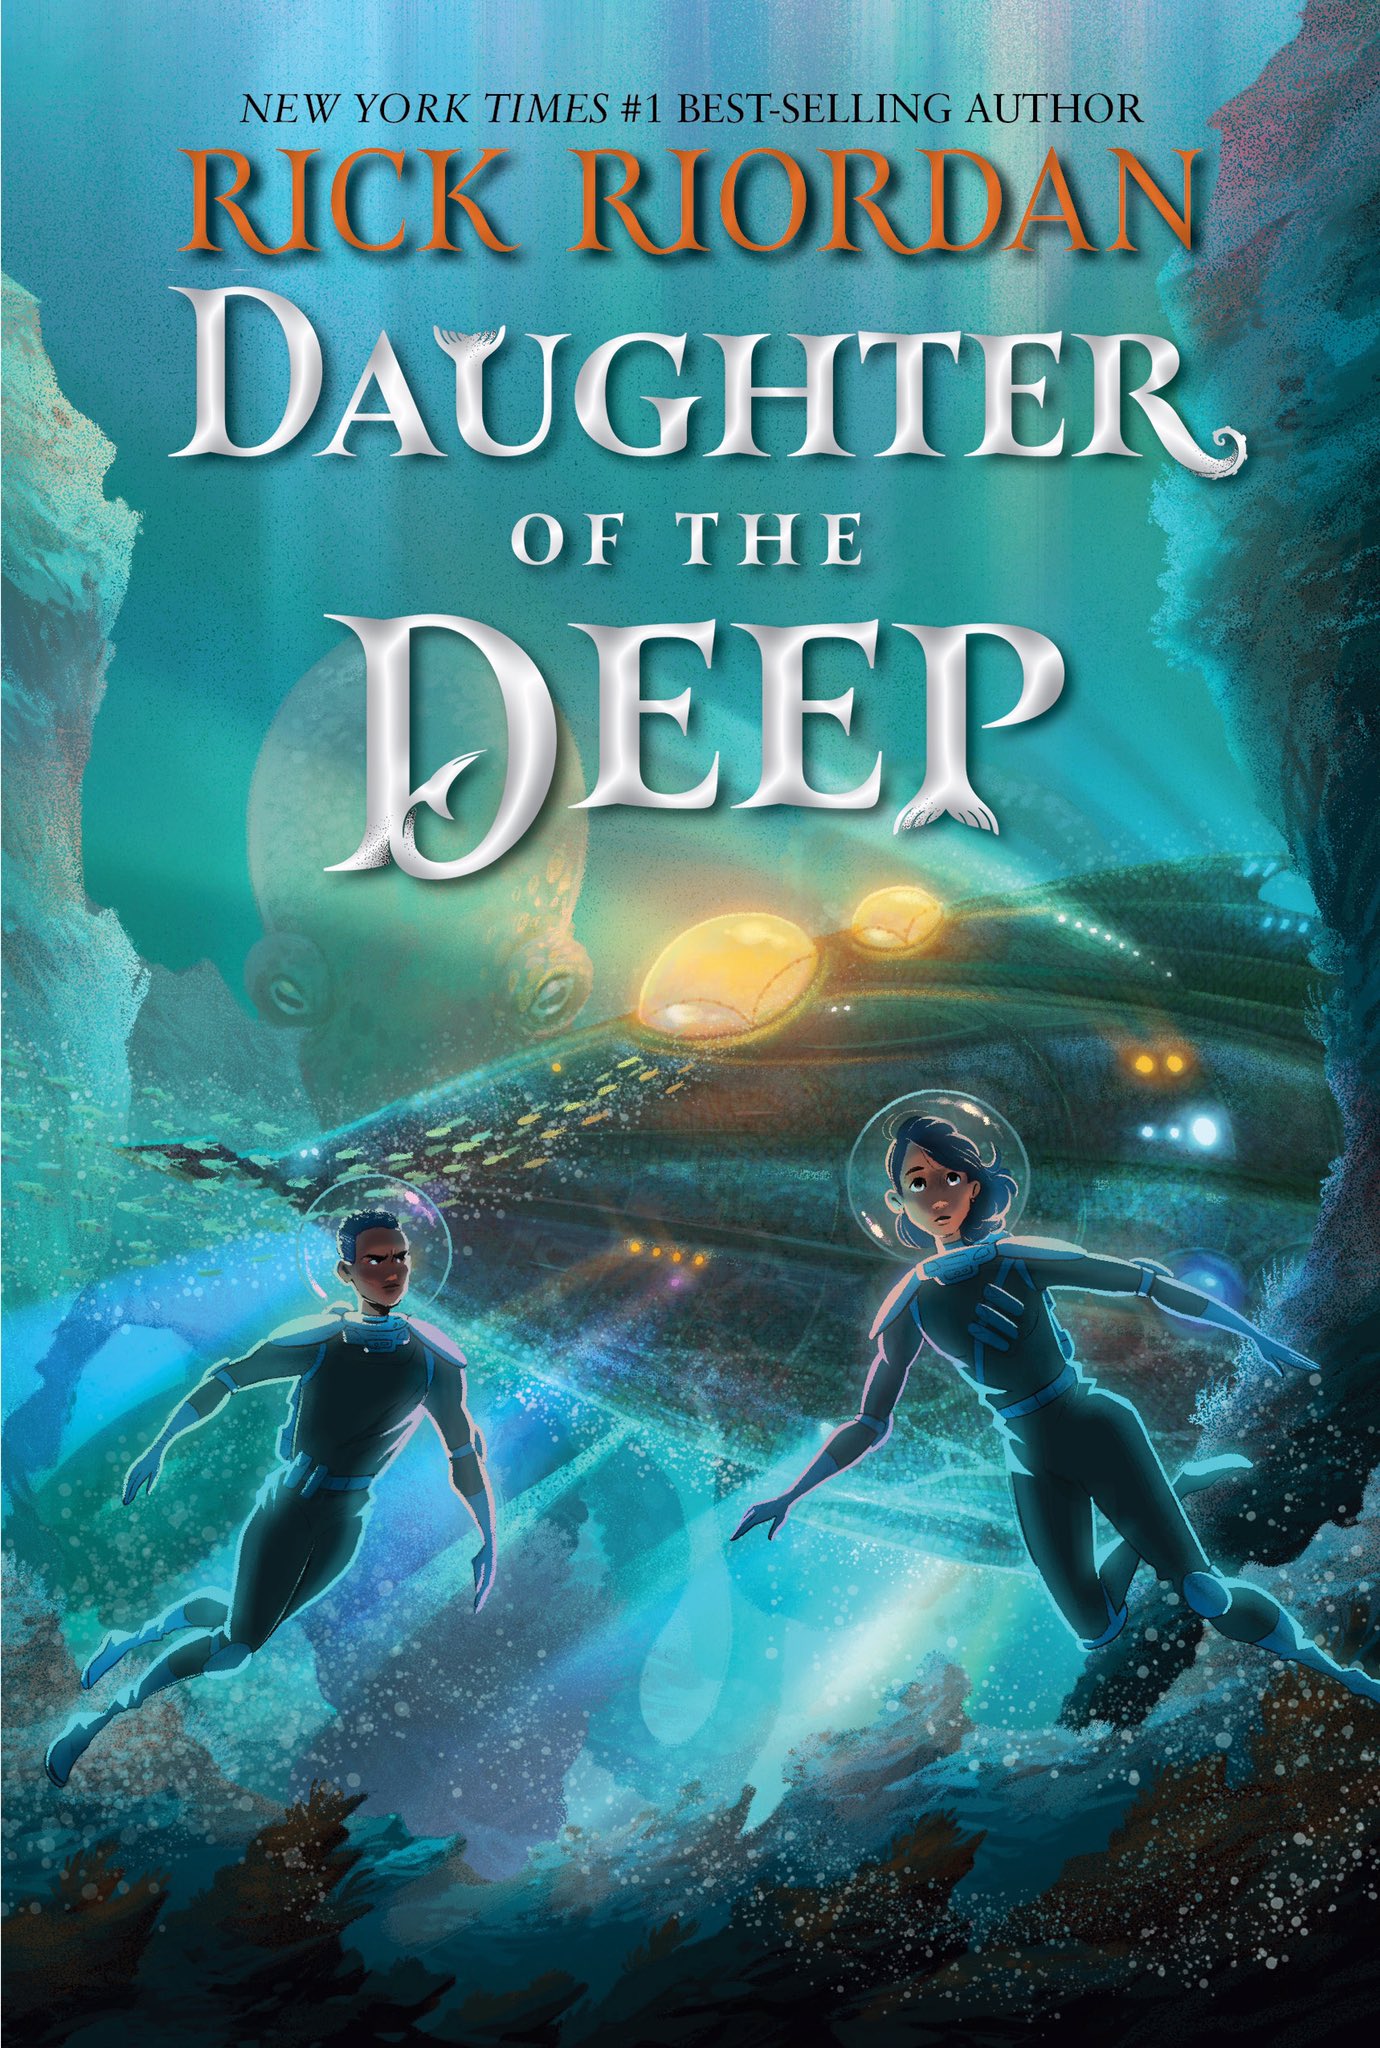 Rick Riordan “Daughter of the Deep” Book Discussion Book